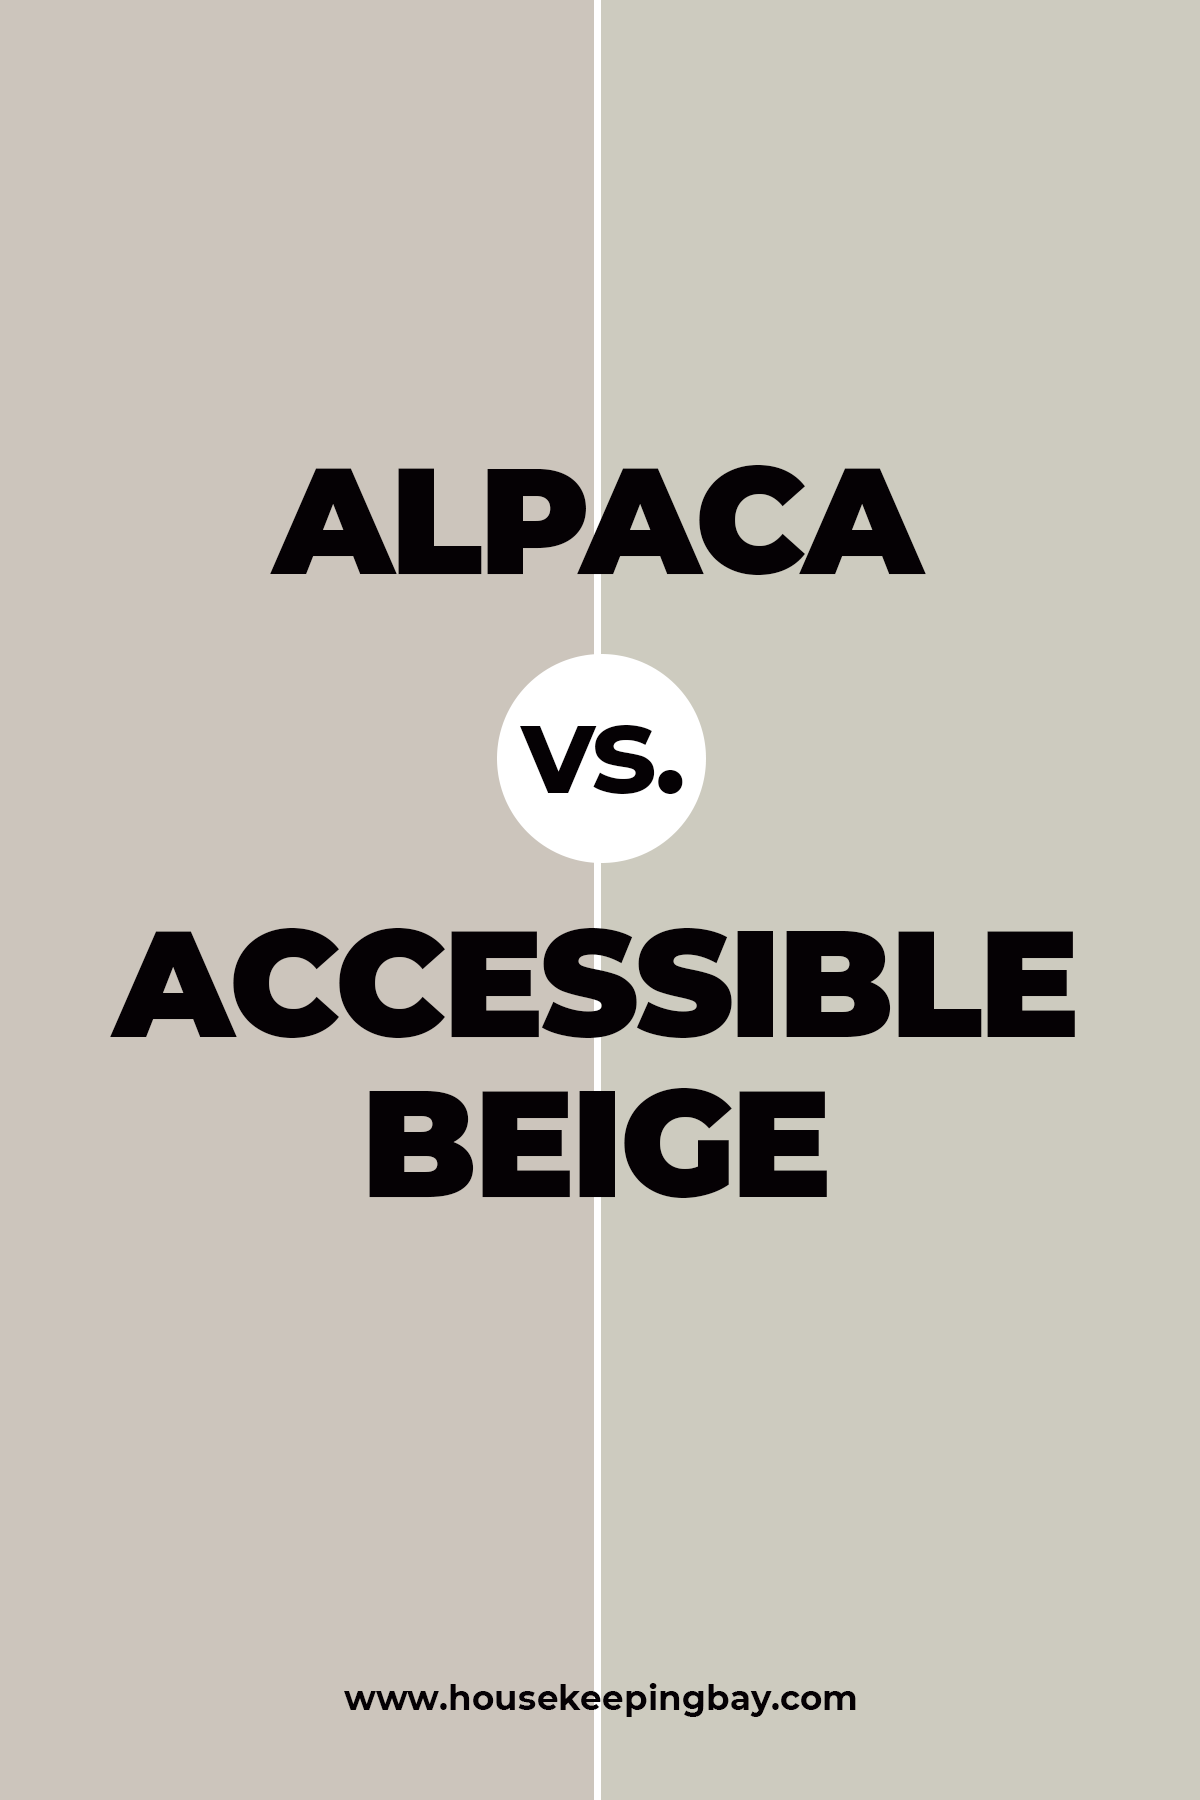 Alpaca vs. Accessible Beige